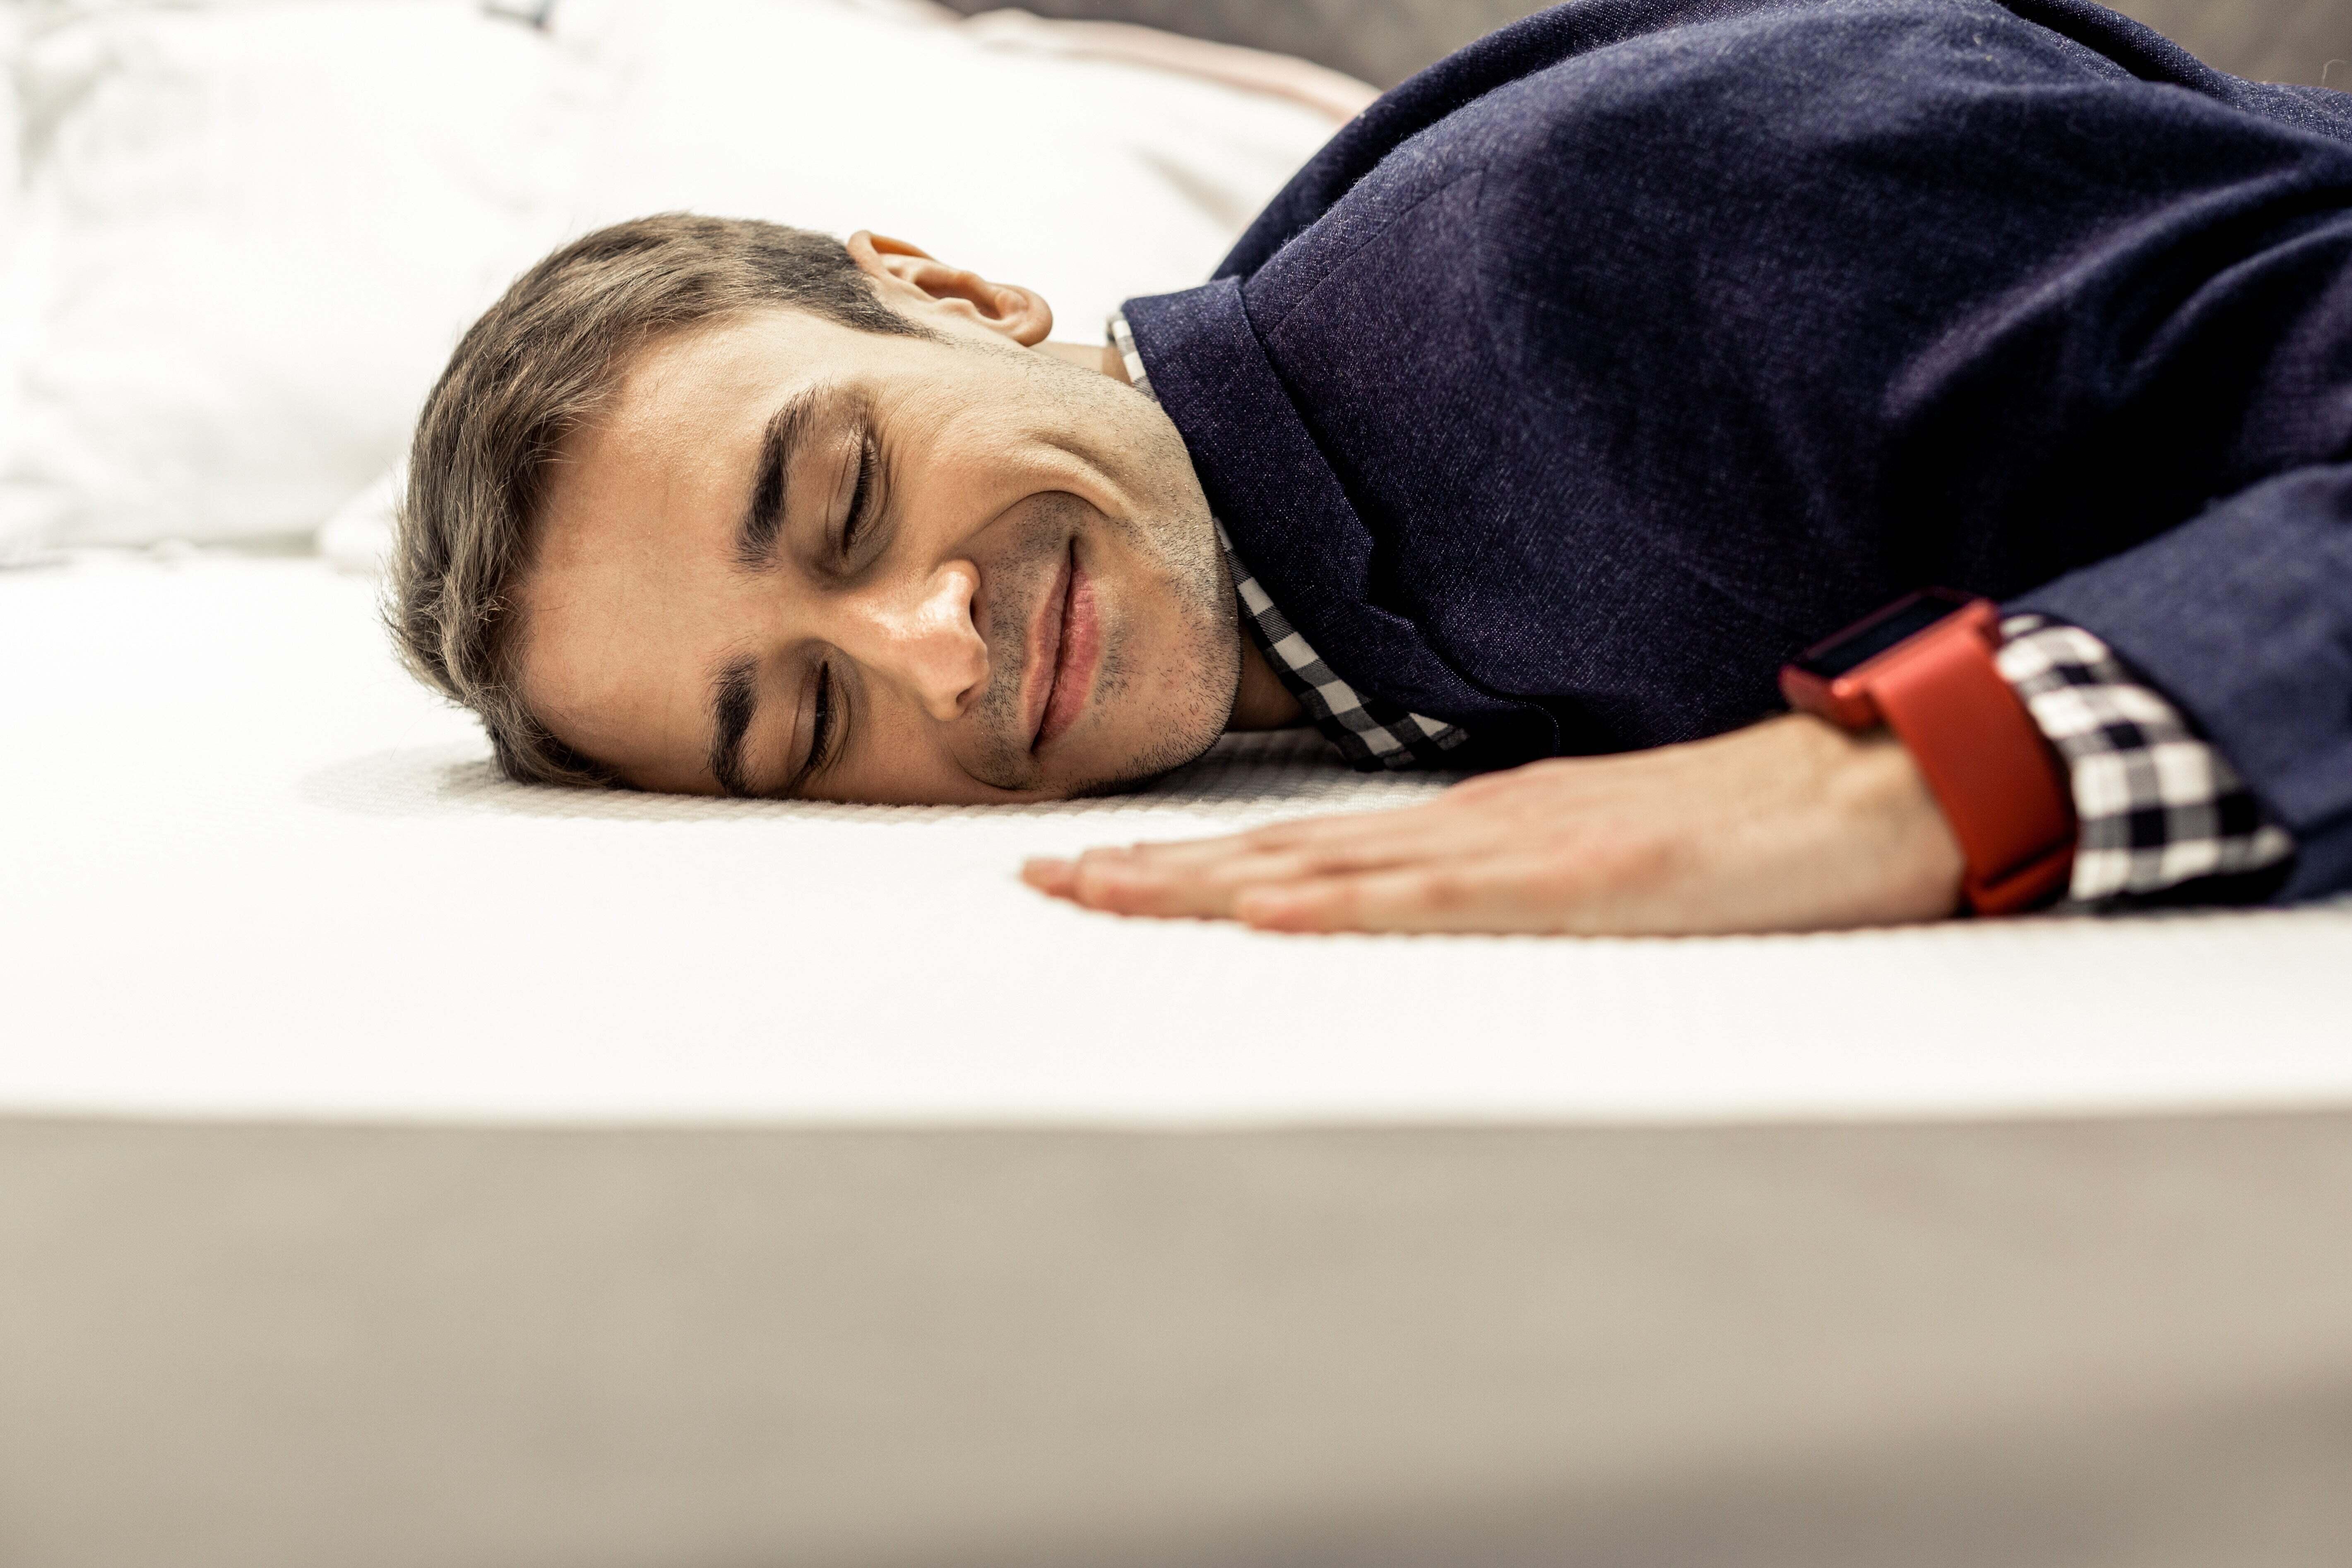 A man laying on a mattress smiling